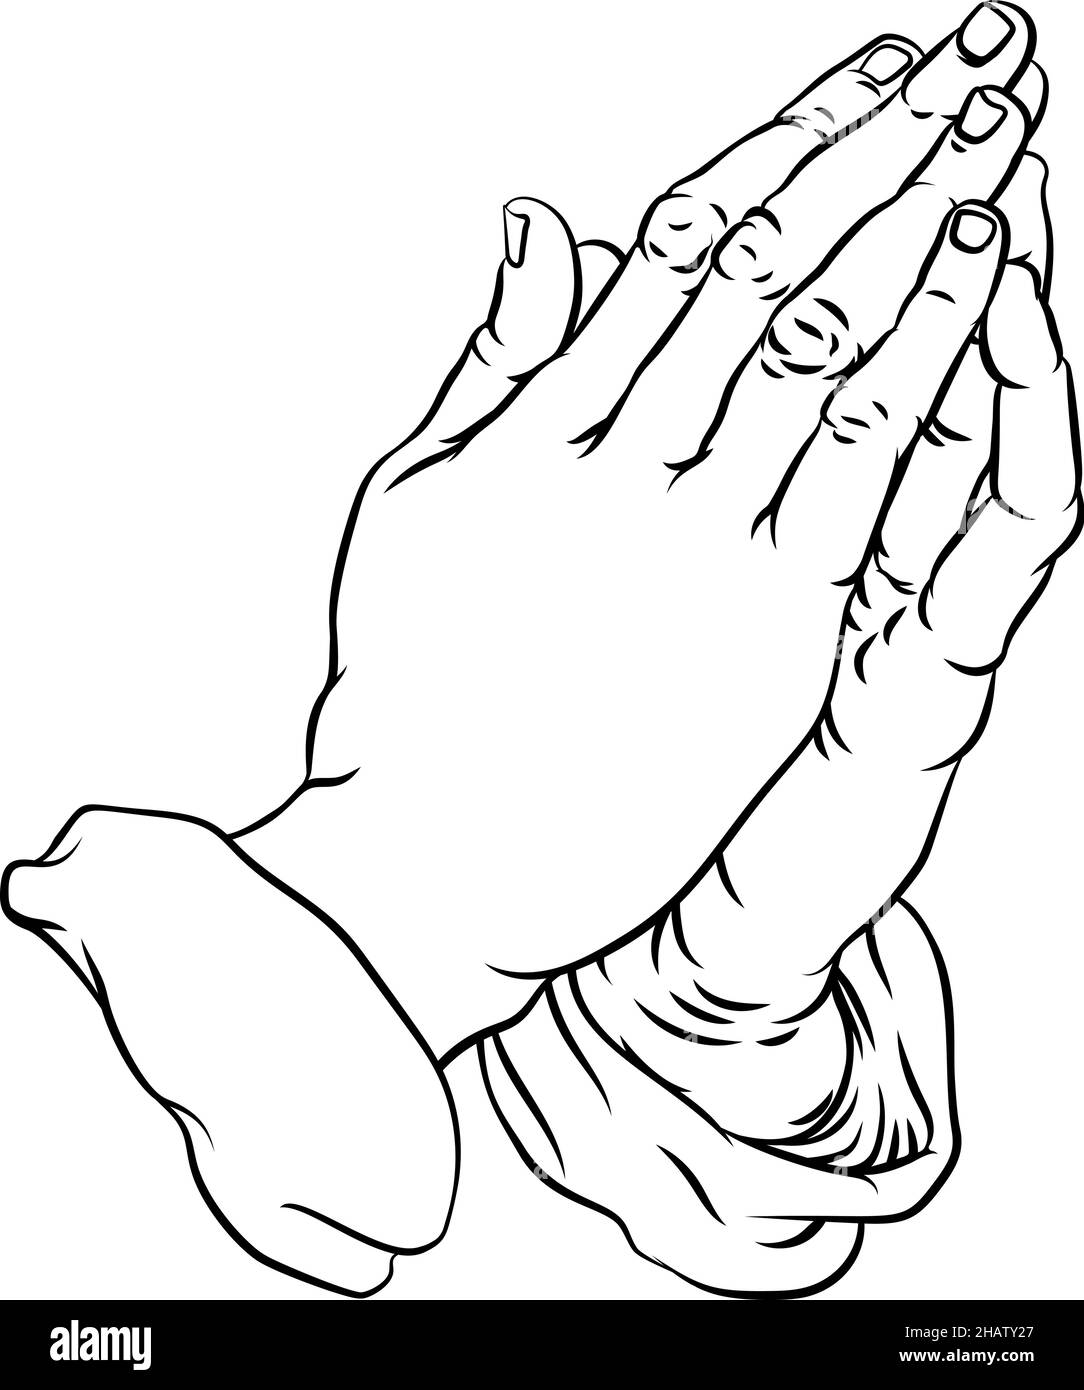 Betende Hände im Gebet Comic-Buch Pop Art Cartoon Stock Vektor